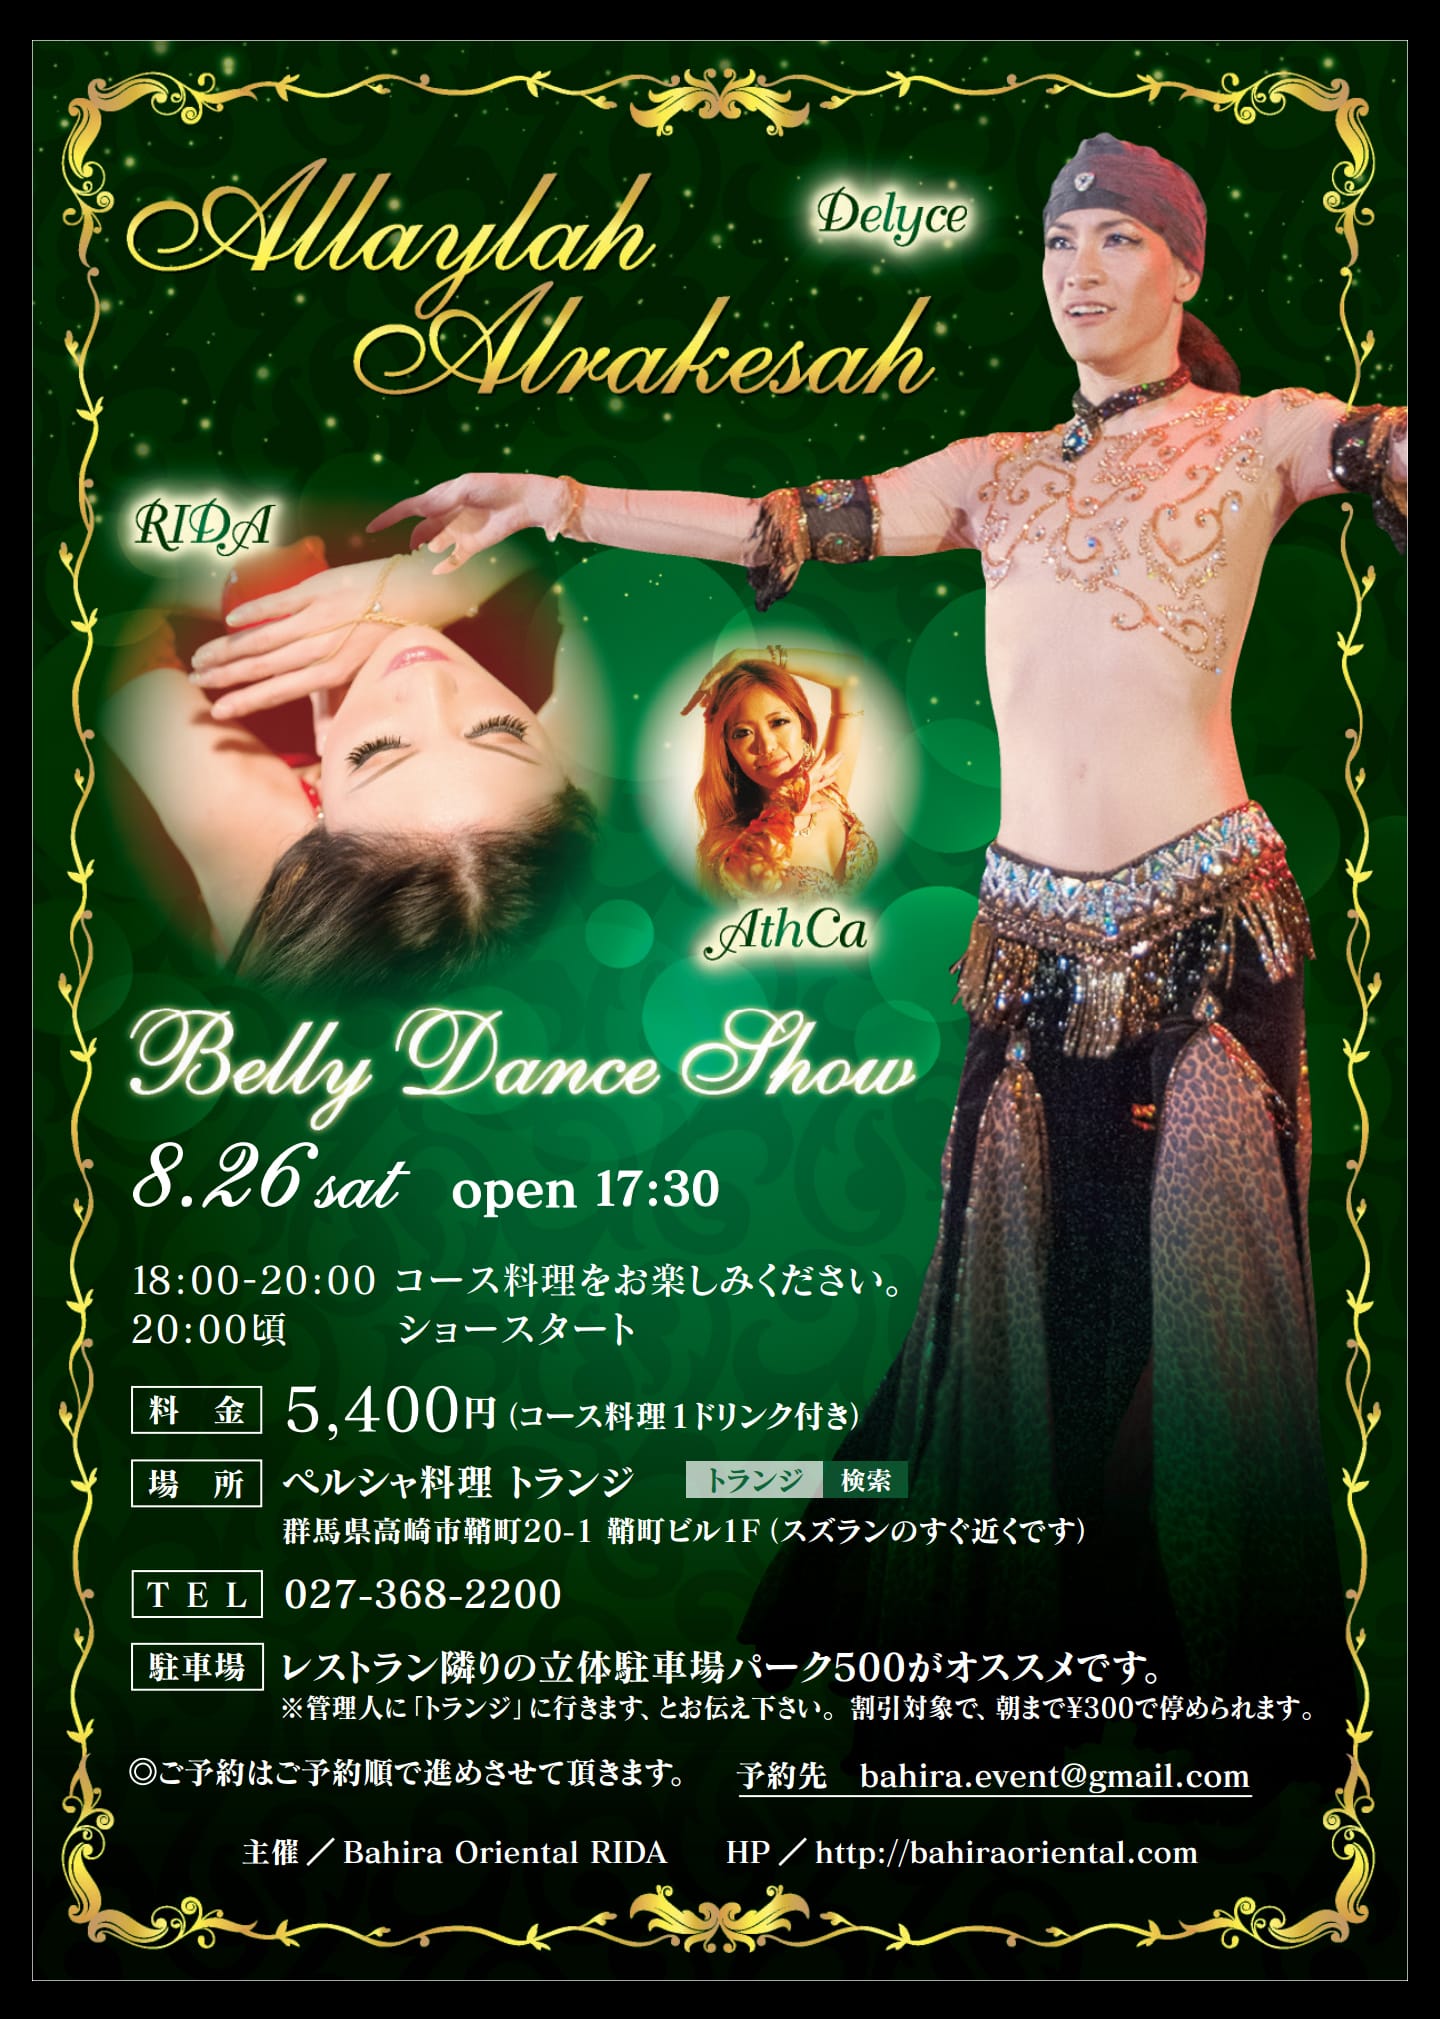 2017.8.26 Sat Allaylah Alrakesah Belly Dance Show